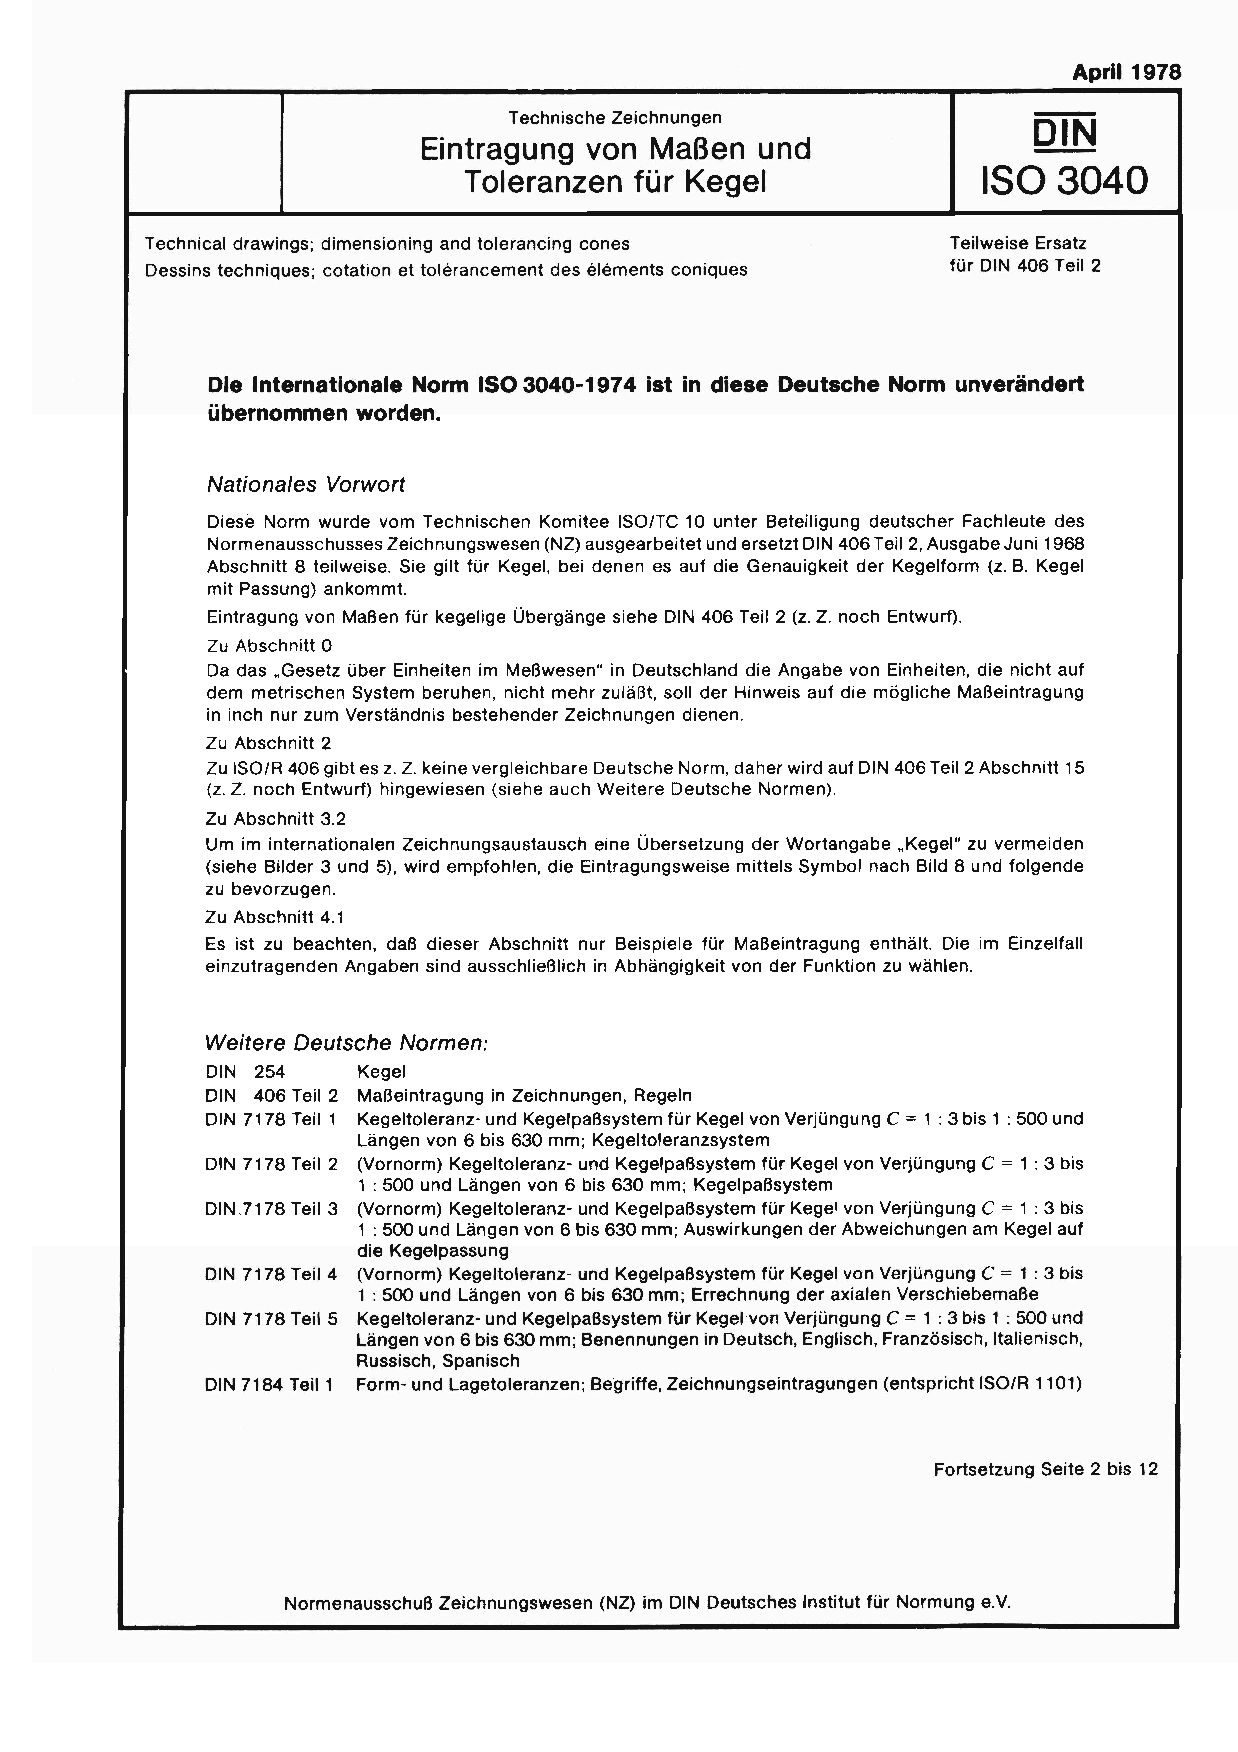 DIN ISO 3040:1978-04